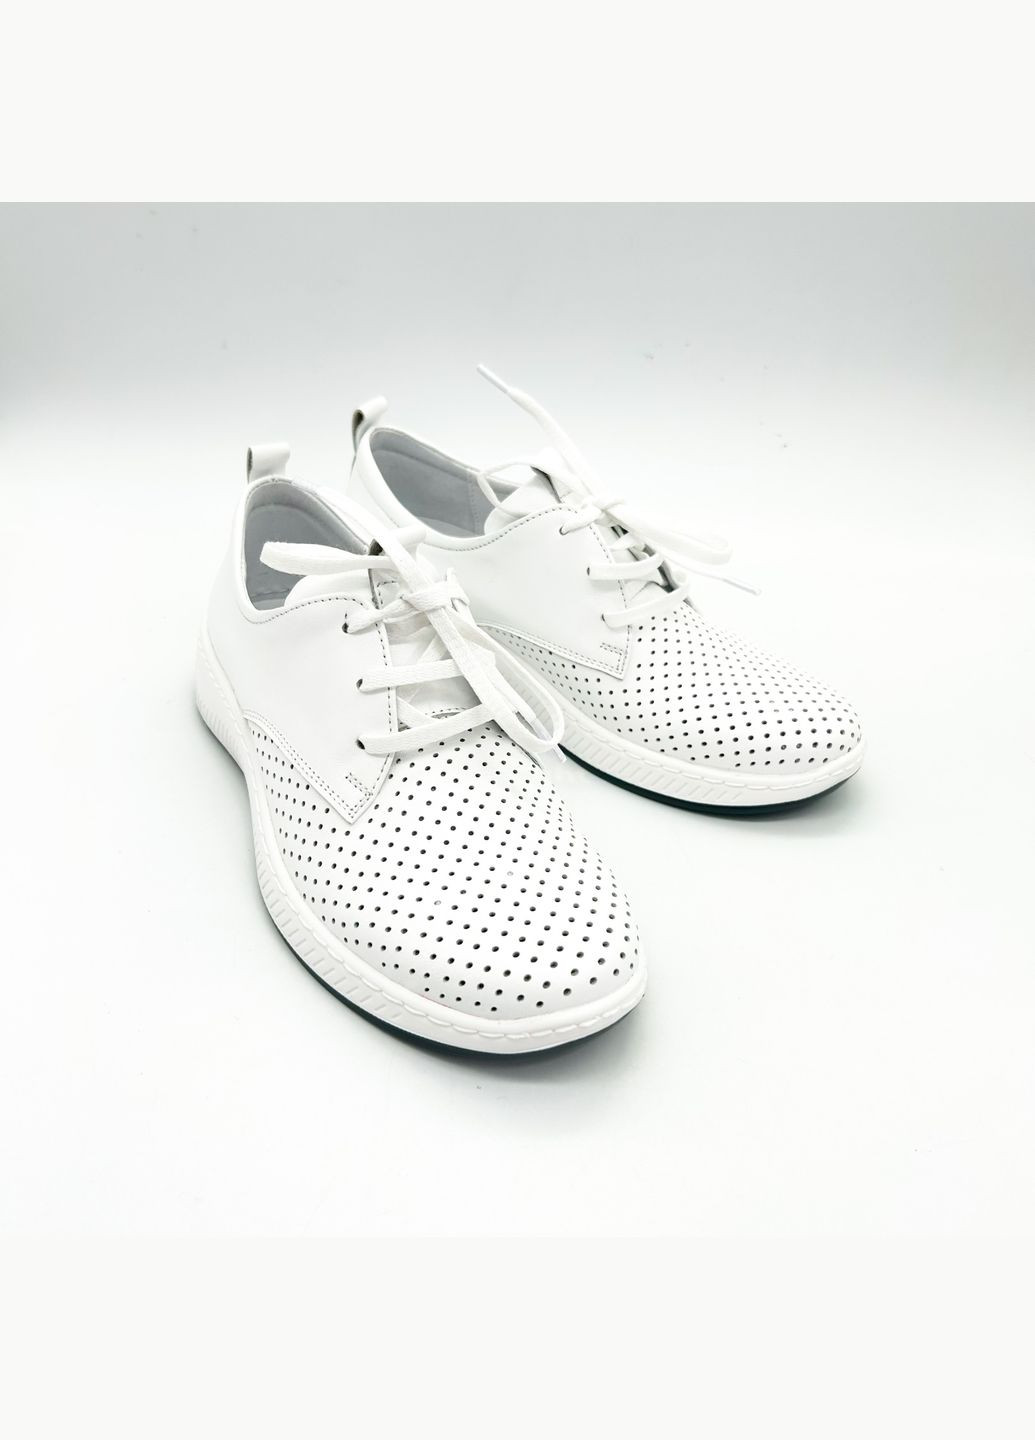 Білі літні кросівки (р) шкіра 0-1-1-8129 Stepter